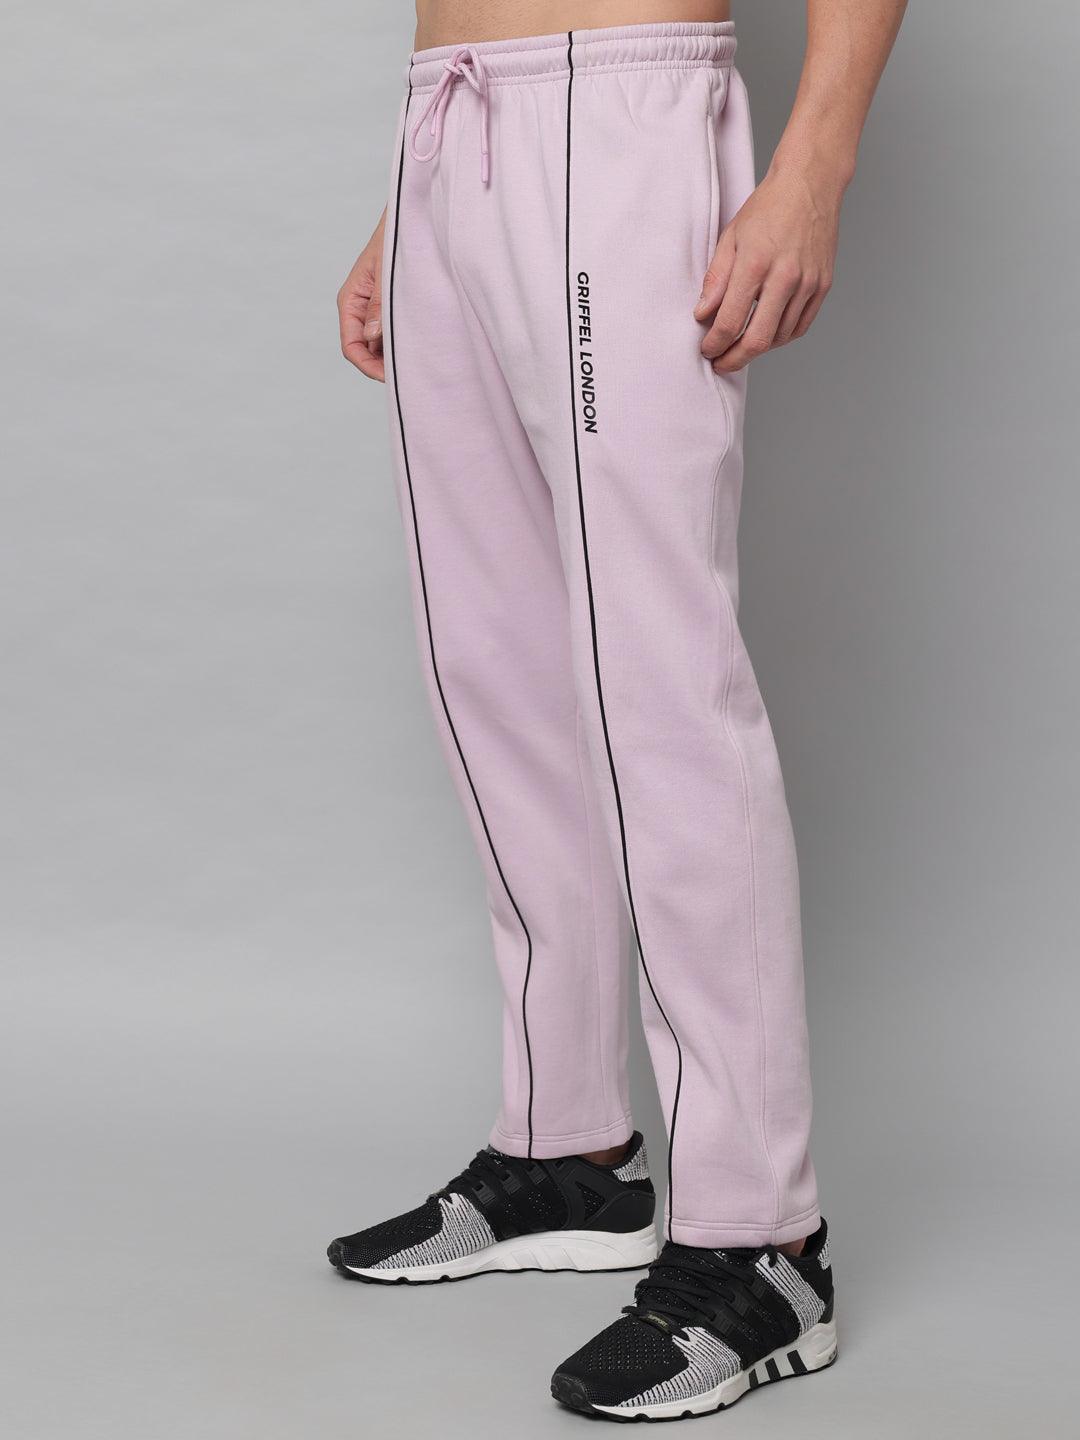 GRIFFEL Men Fleece Basic Solid Front Logo Light Purple Trackpants - griffel